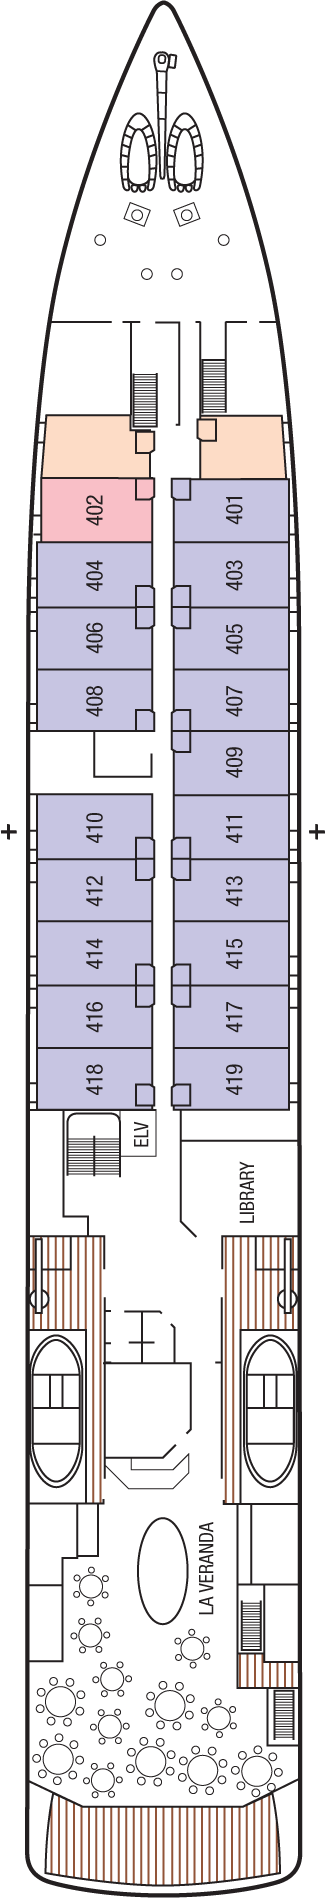 Deck 4: Deck 4